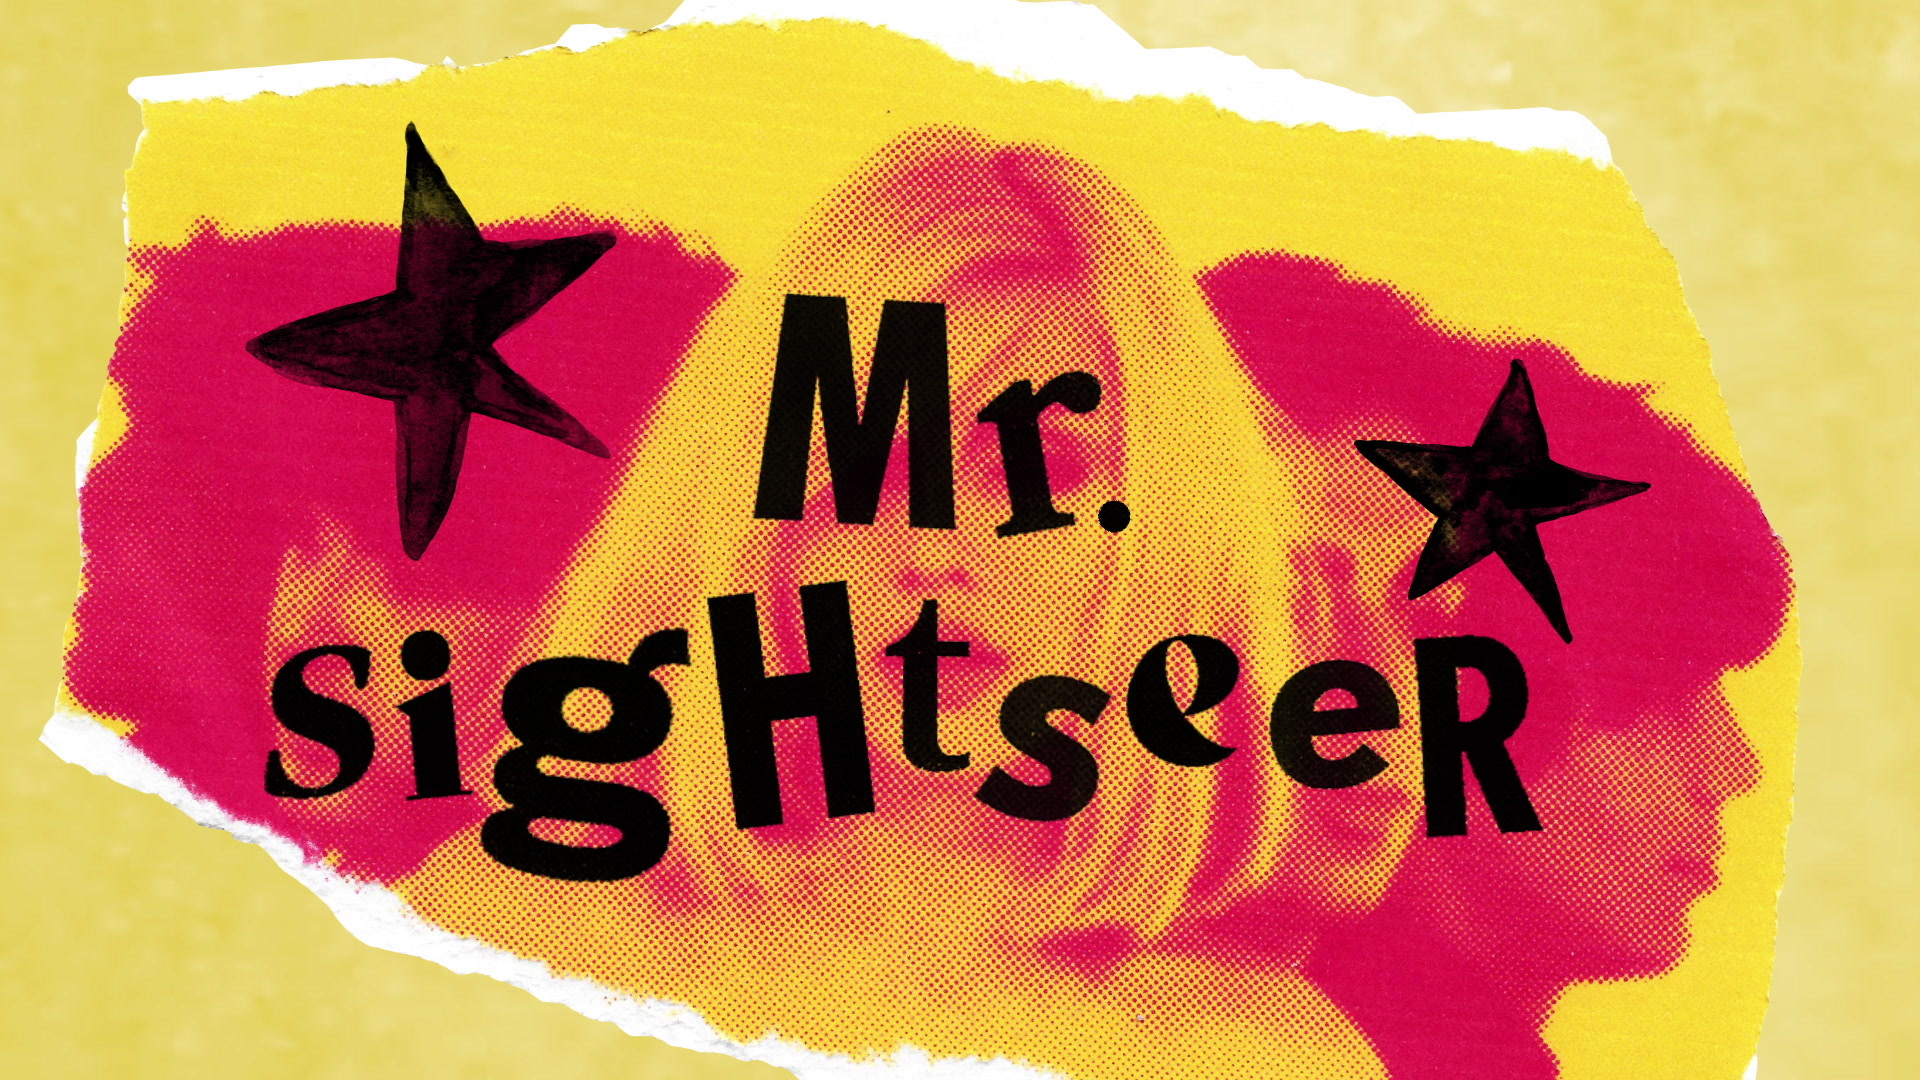 Mr. Sightseer